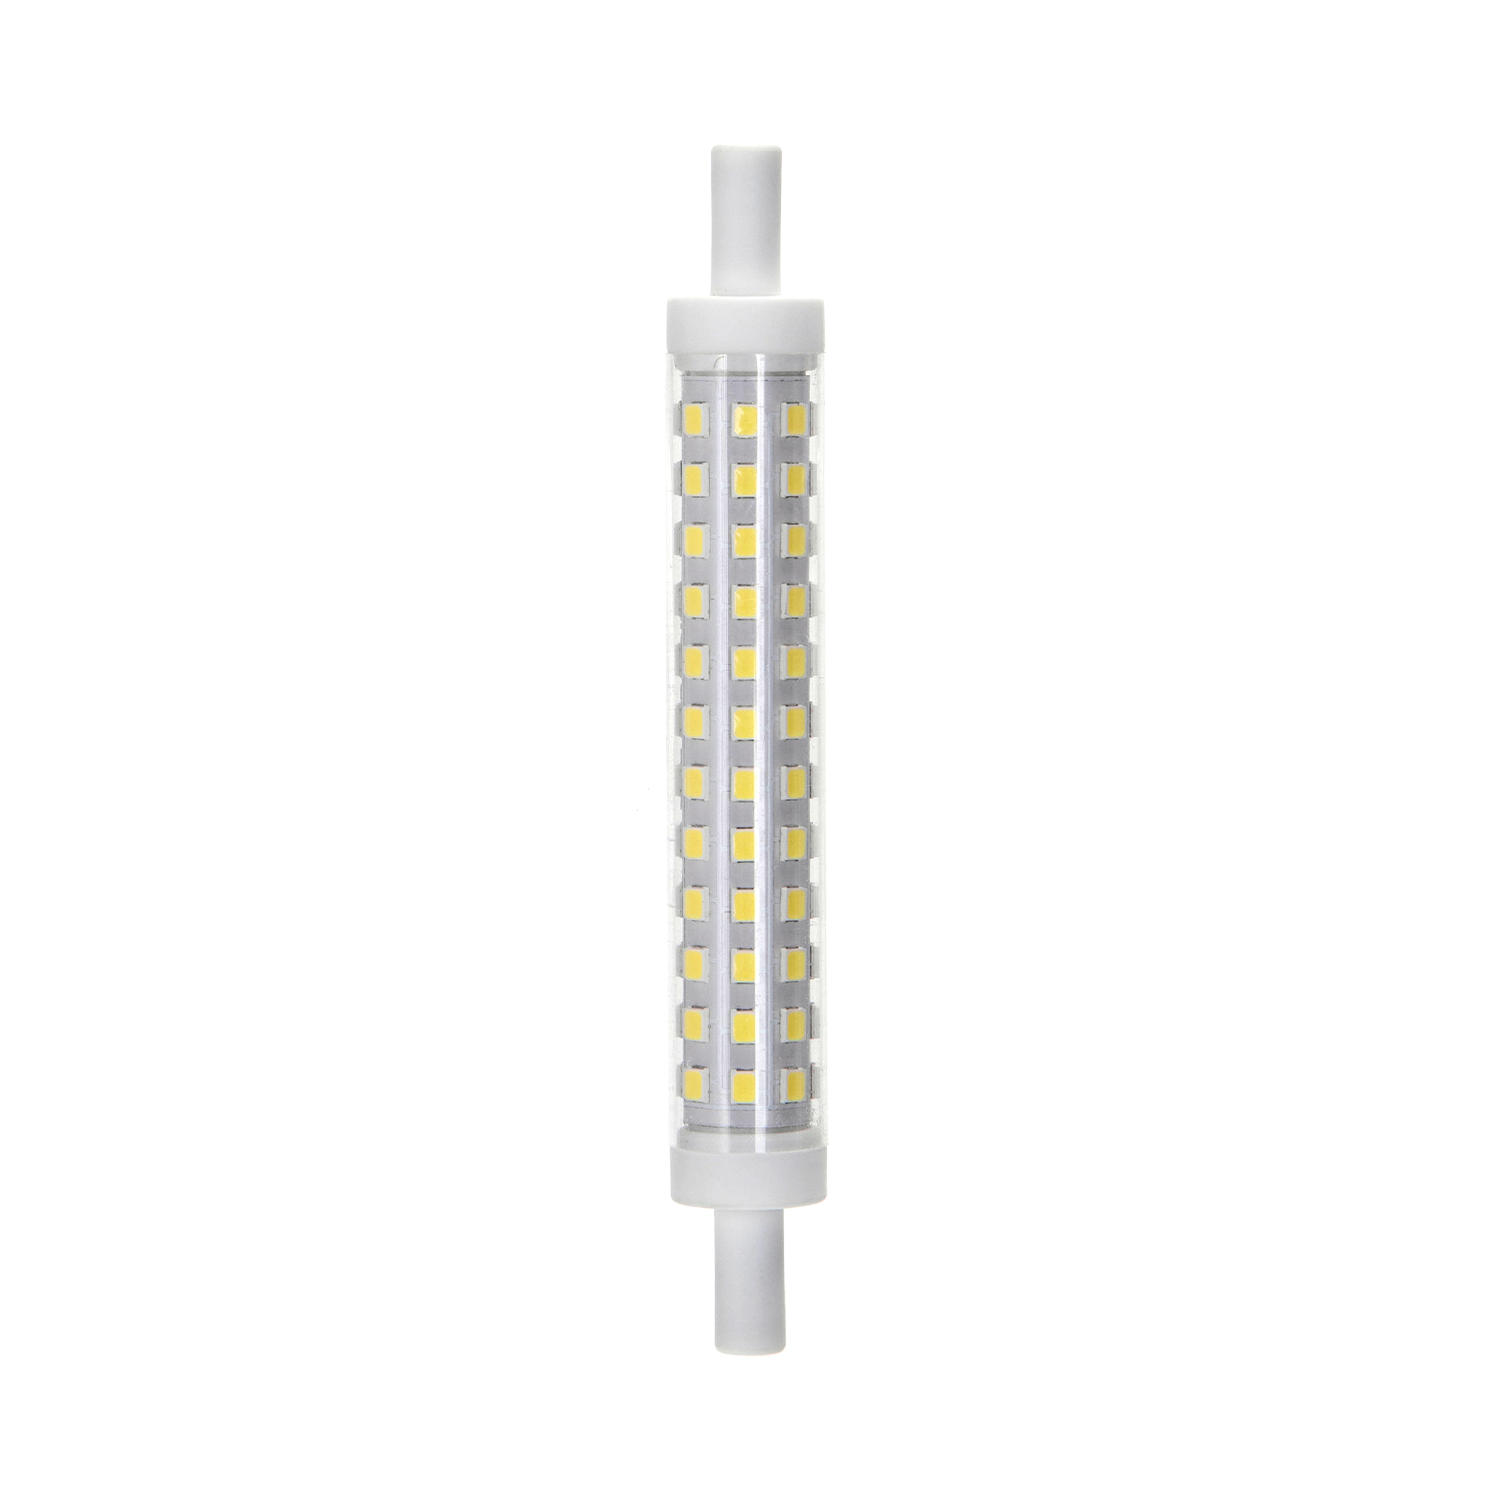 R7S LED Lampe 78 mm - 5W - 500 Lumen - 6500K 